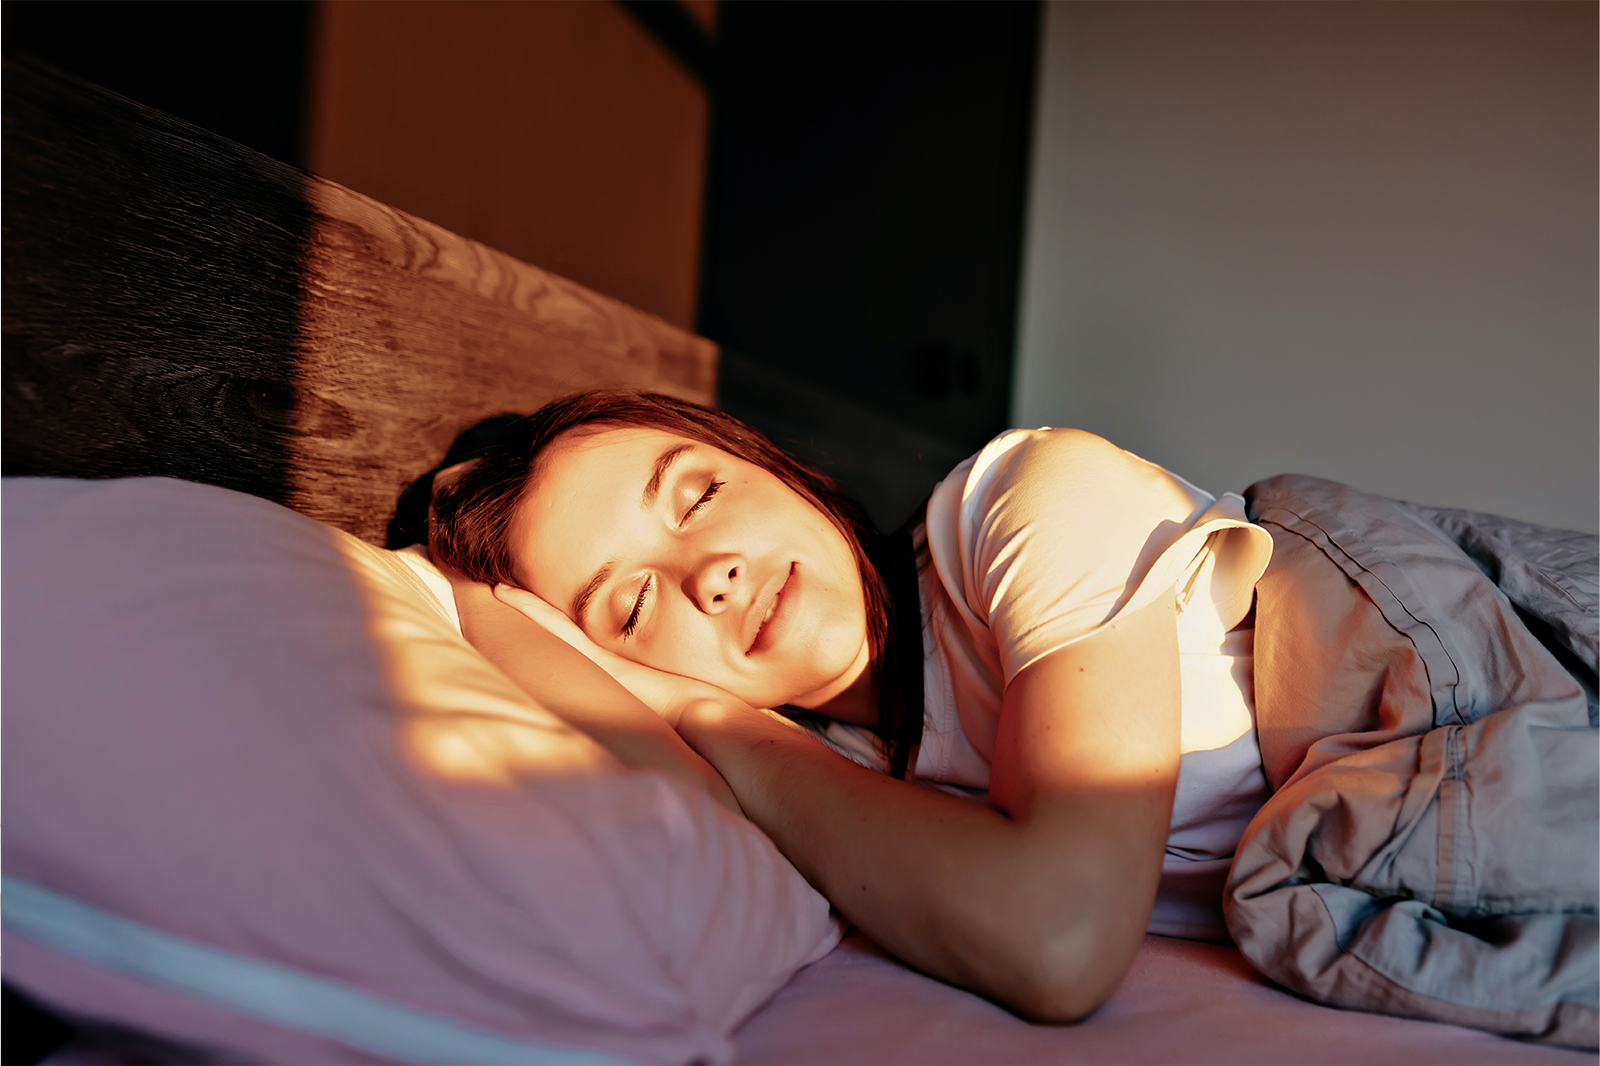 Sleep expert shares 6 tips for sleeping in the heat